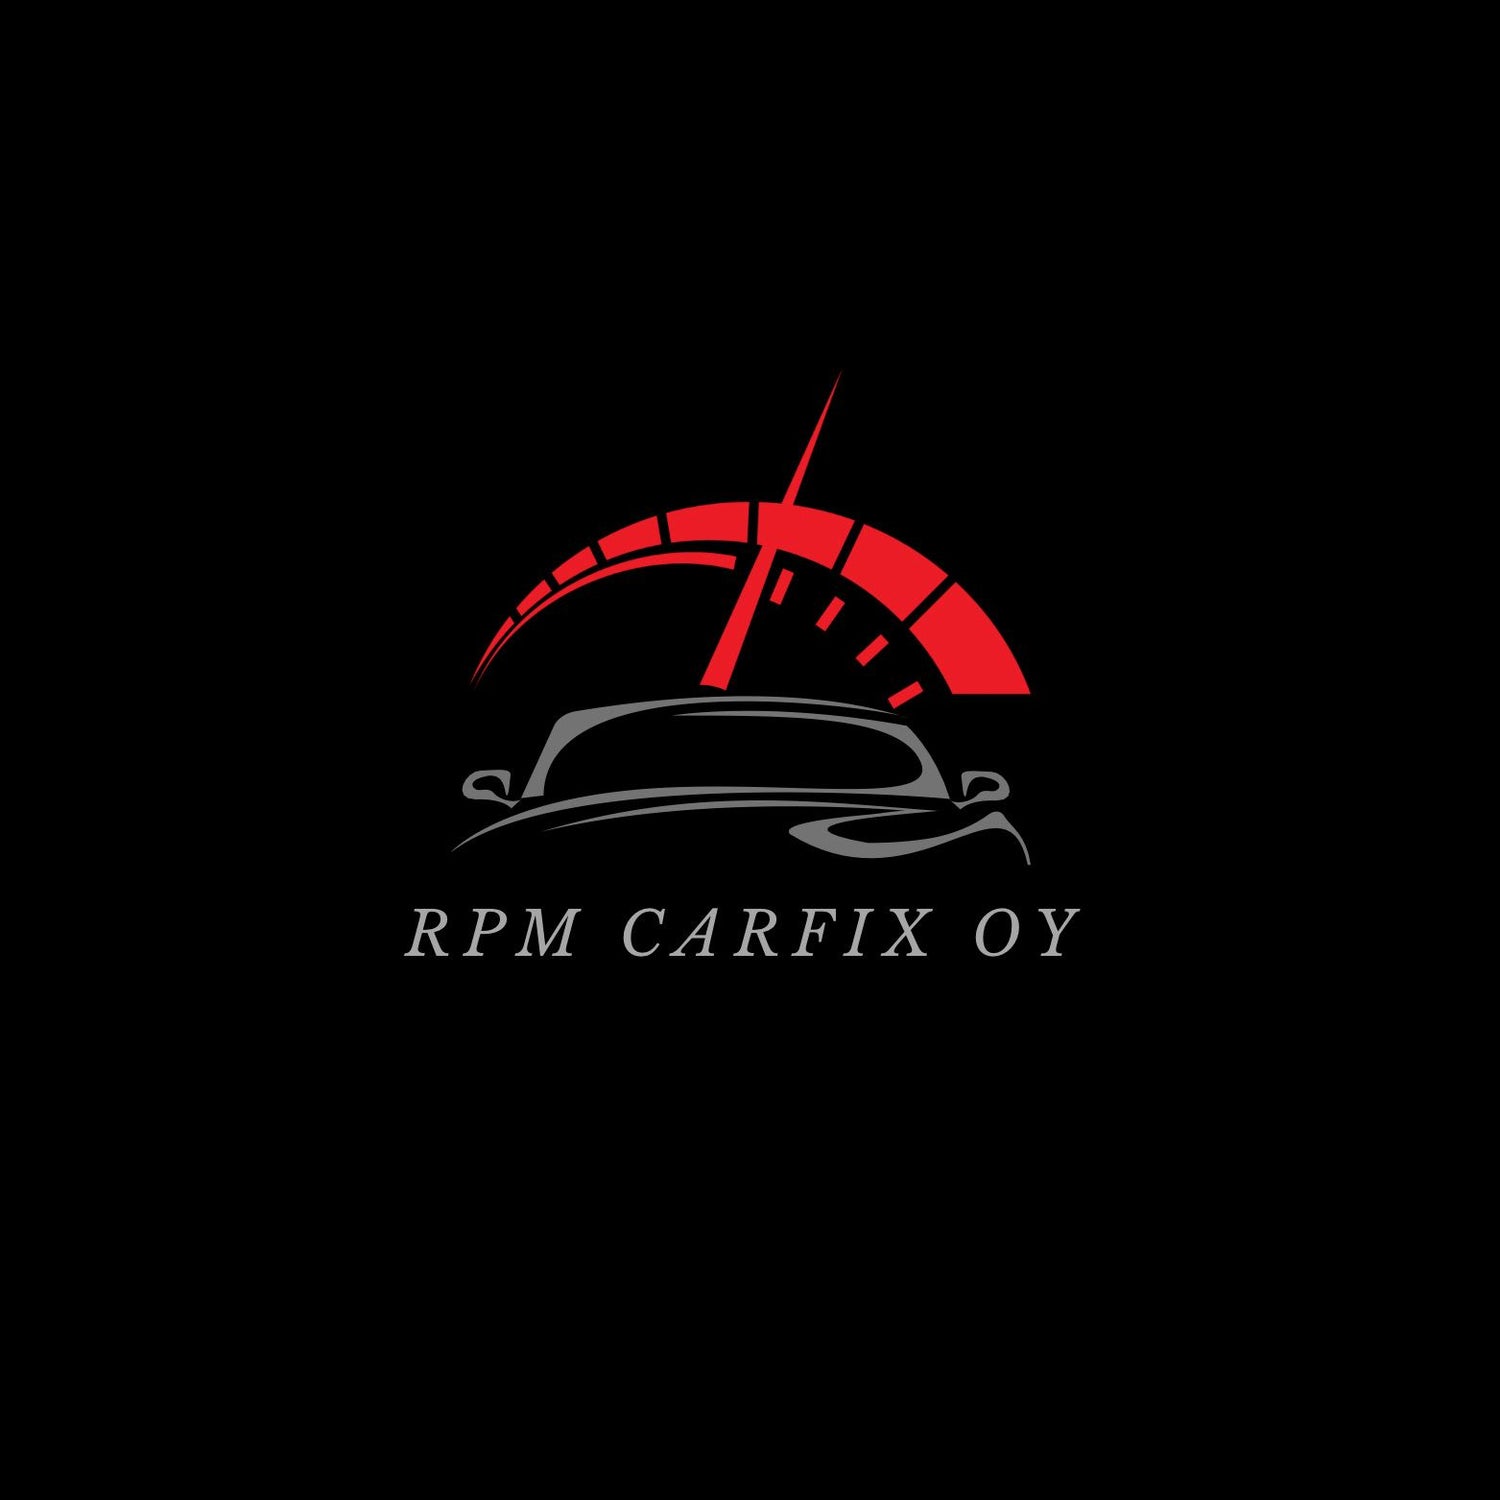 RPM Carfix Oy